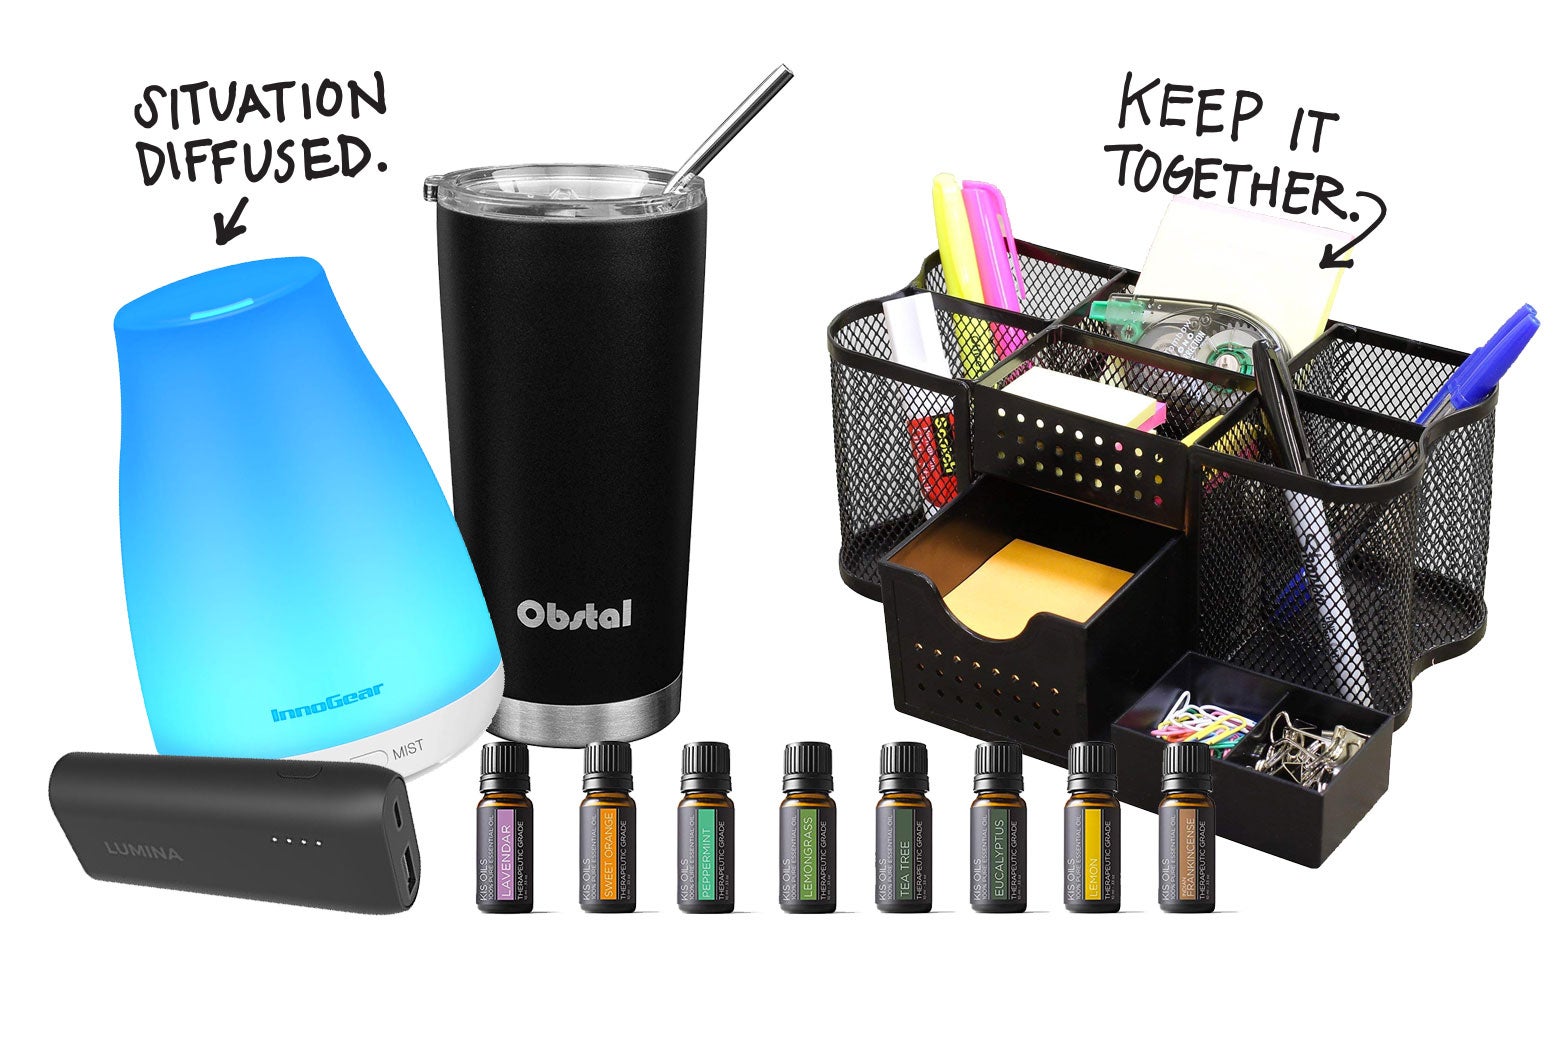 Essential oils, a diffuser, a portable phone charger, a steel tumbler, a desk organizer.